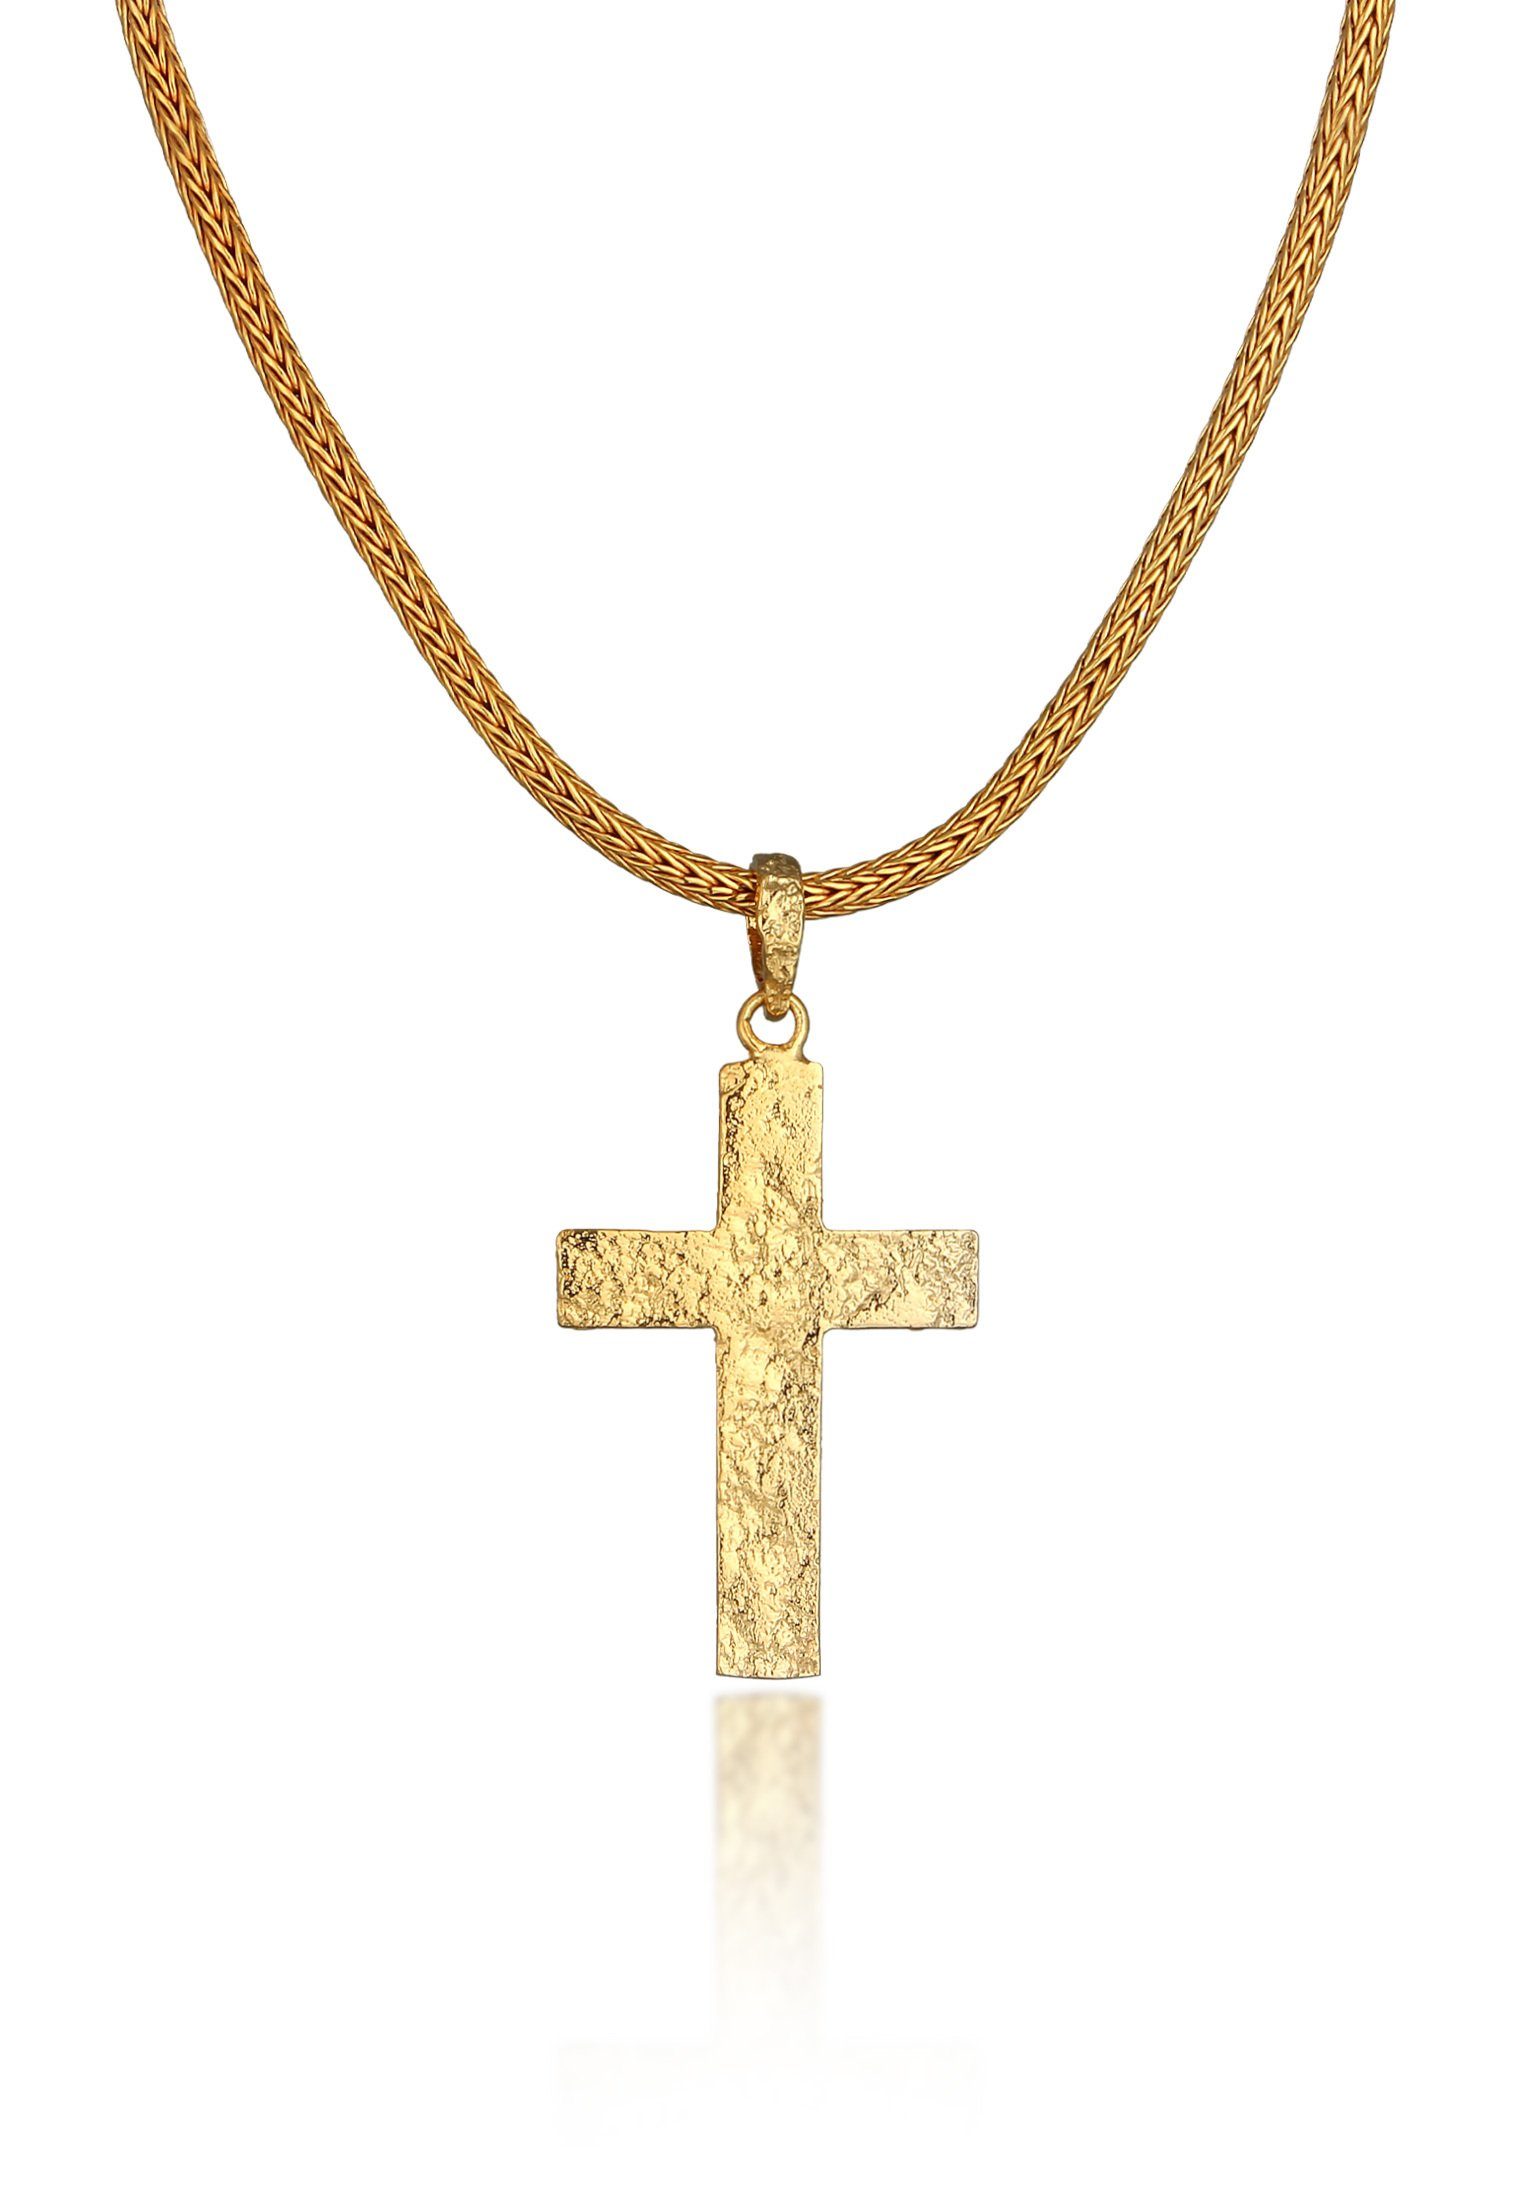 Gehämmert Herren Gold Kreuz 925 Anhänger Kette mit Zopfkette Kreuz Silber, Kuzzoi